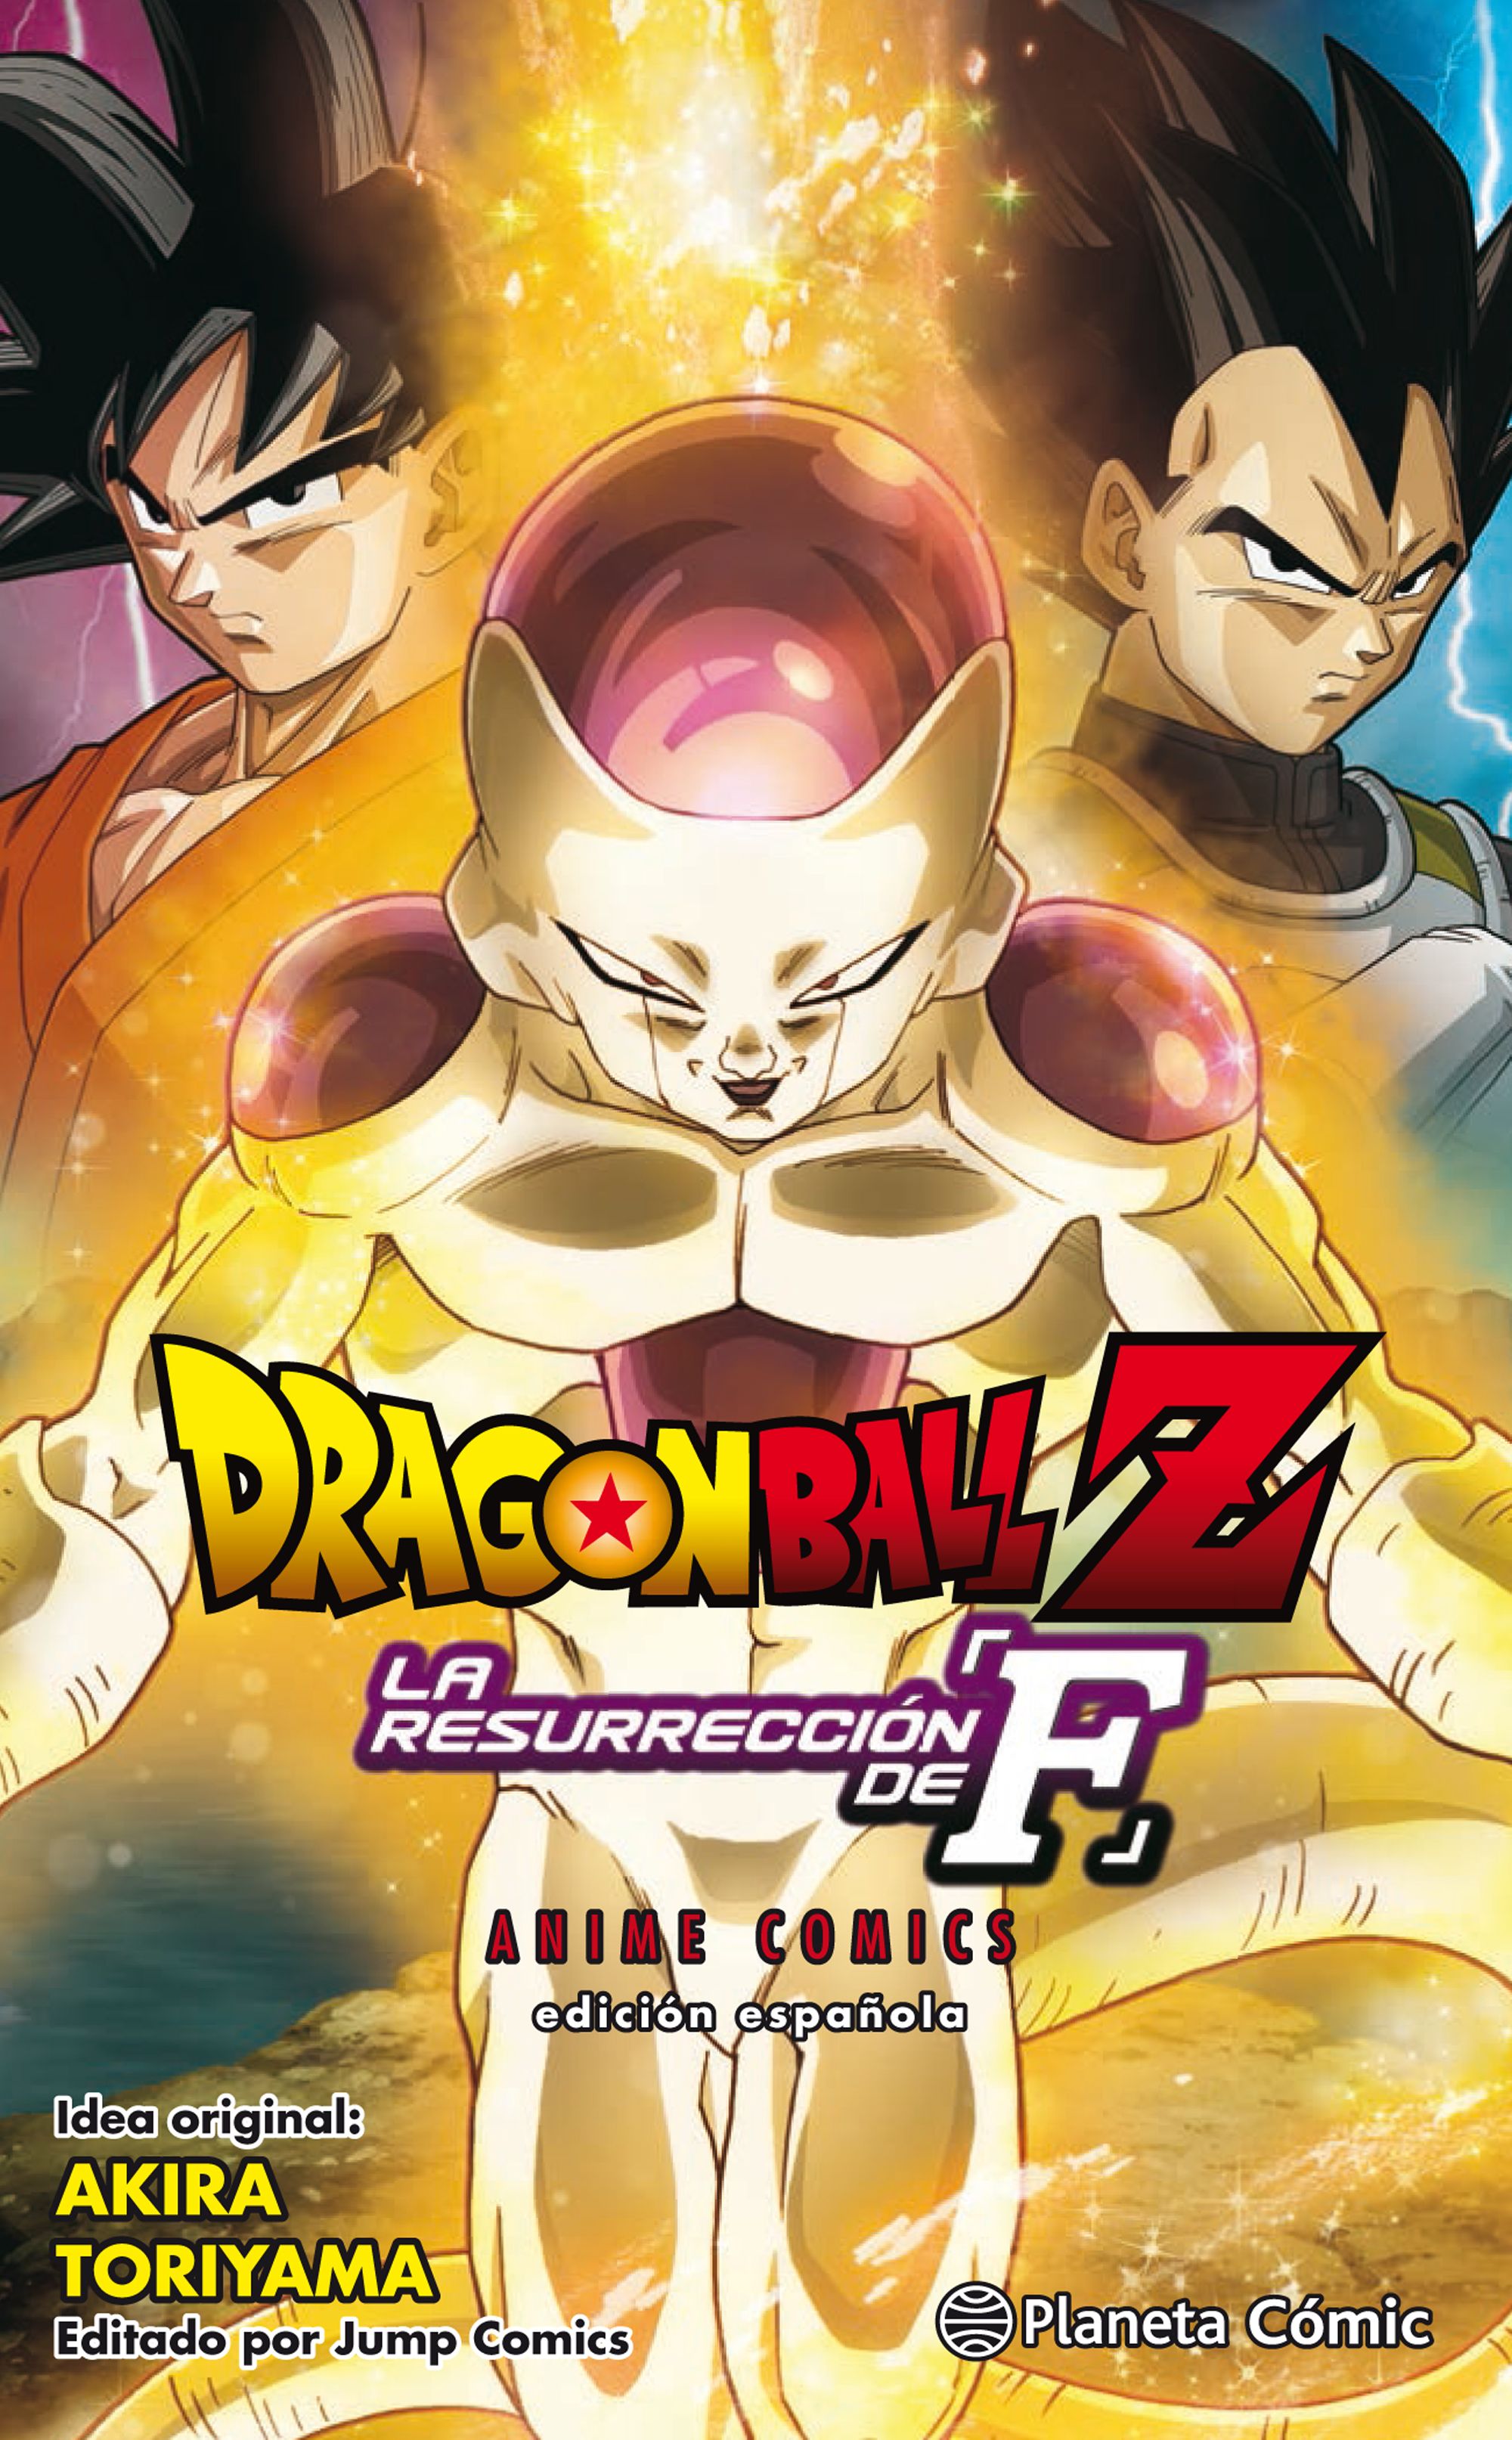 Dragon Ball Z Anime Series Saiyanos nº 04/05: Saga de los Saiyanos